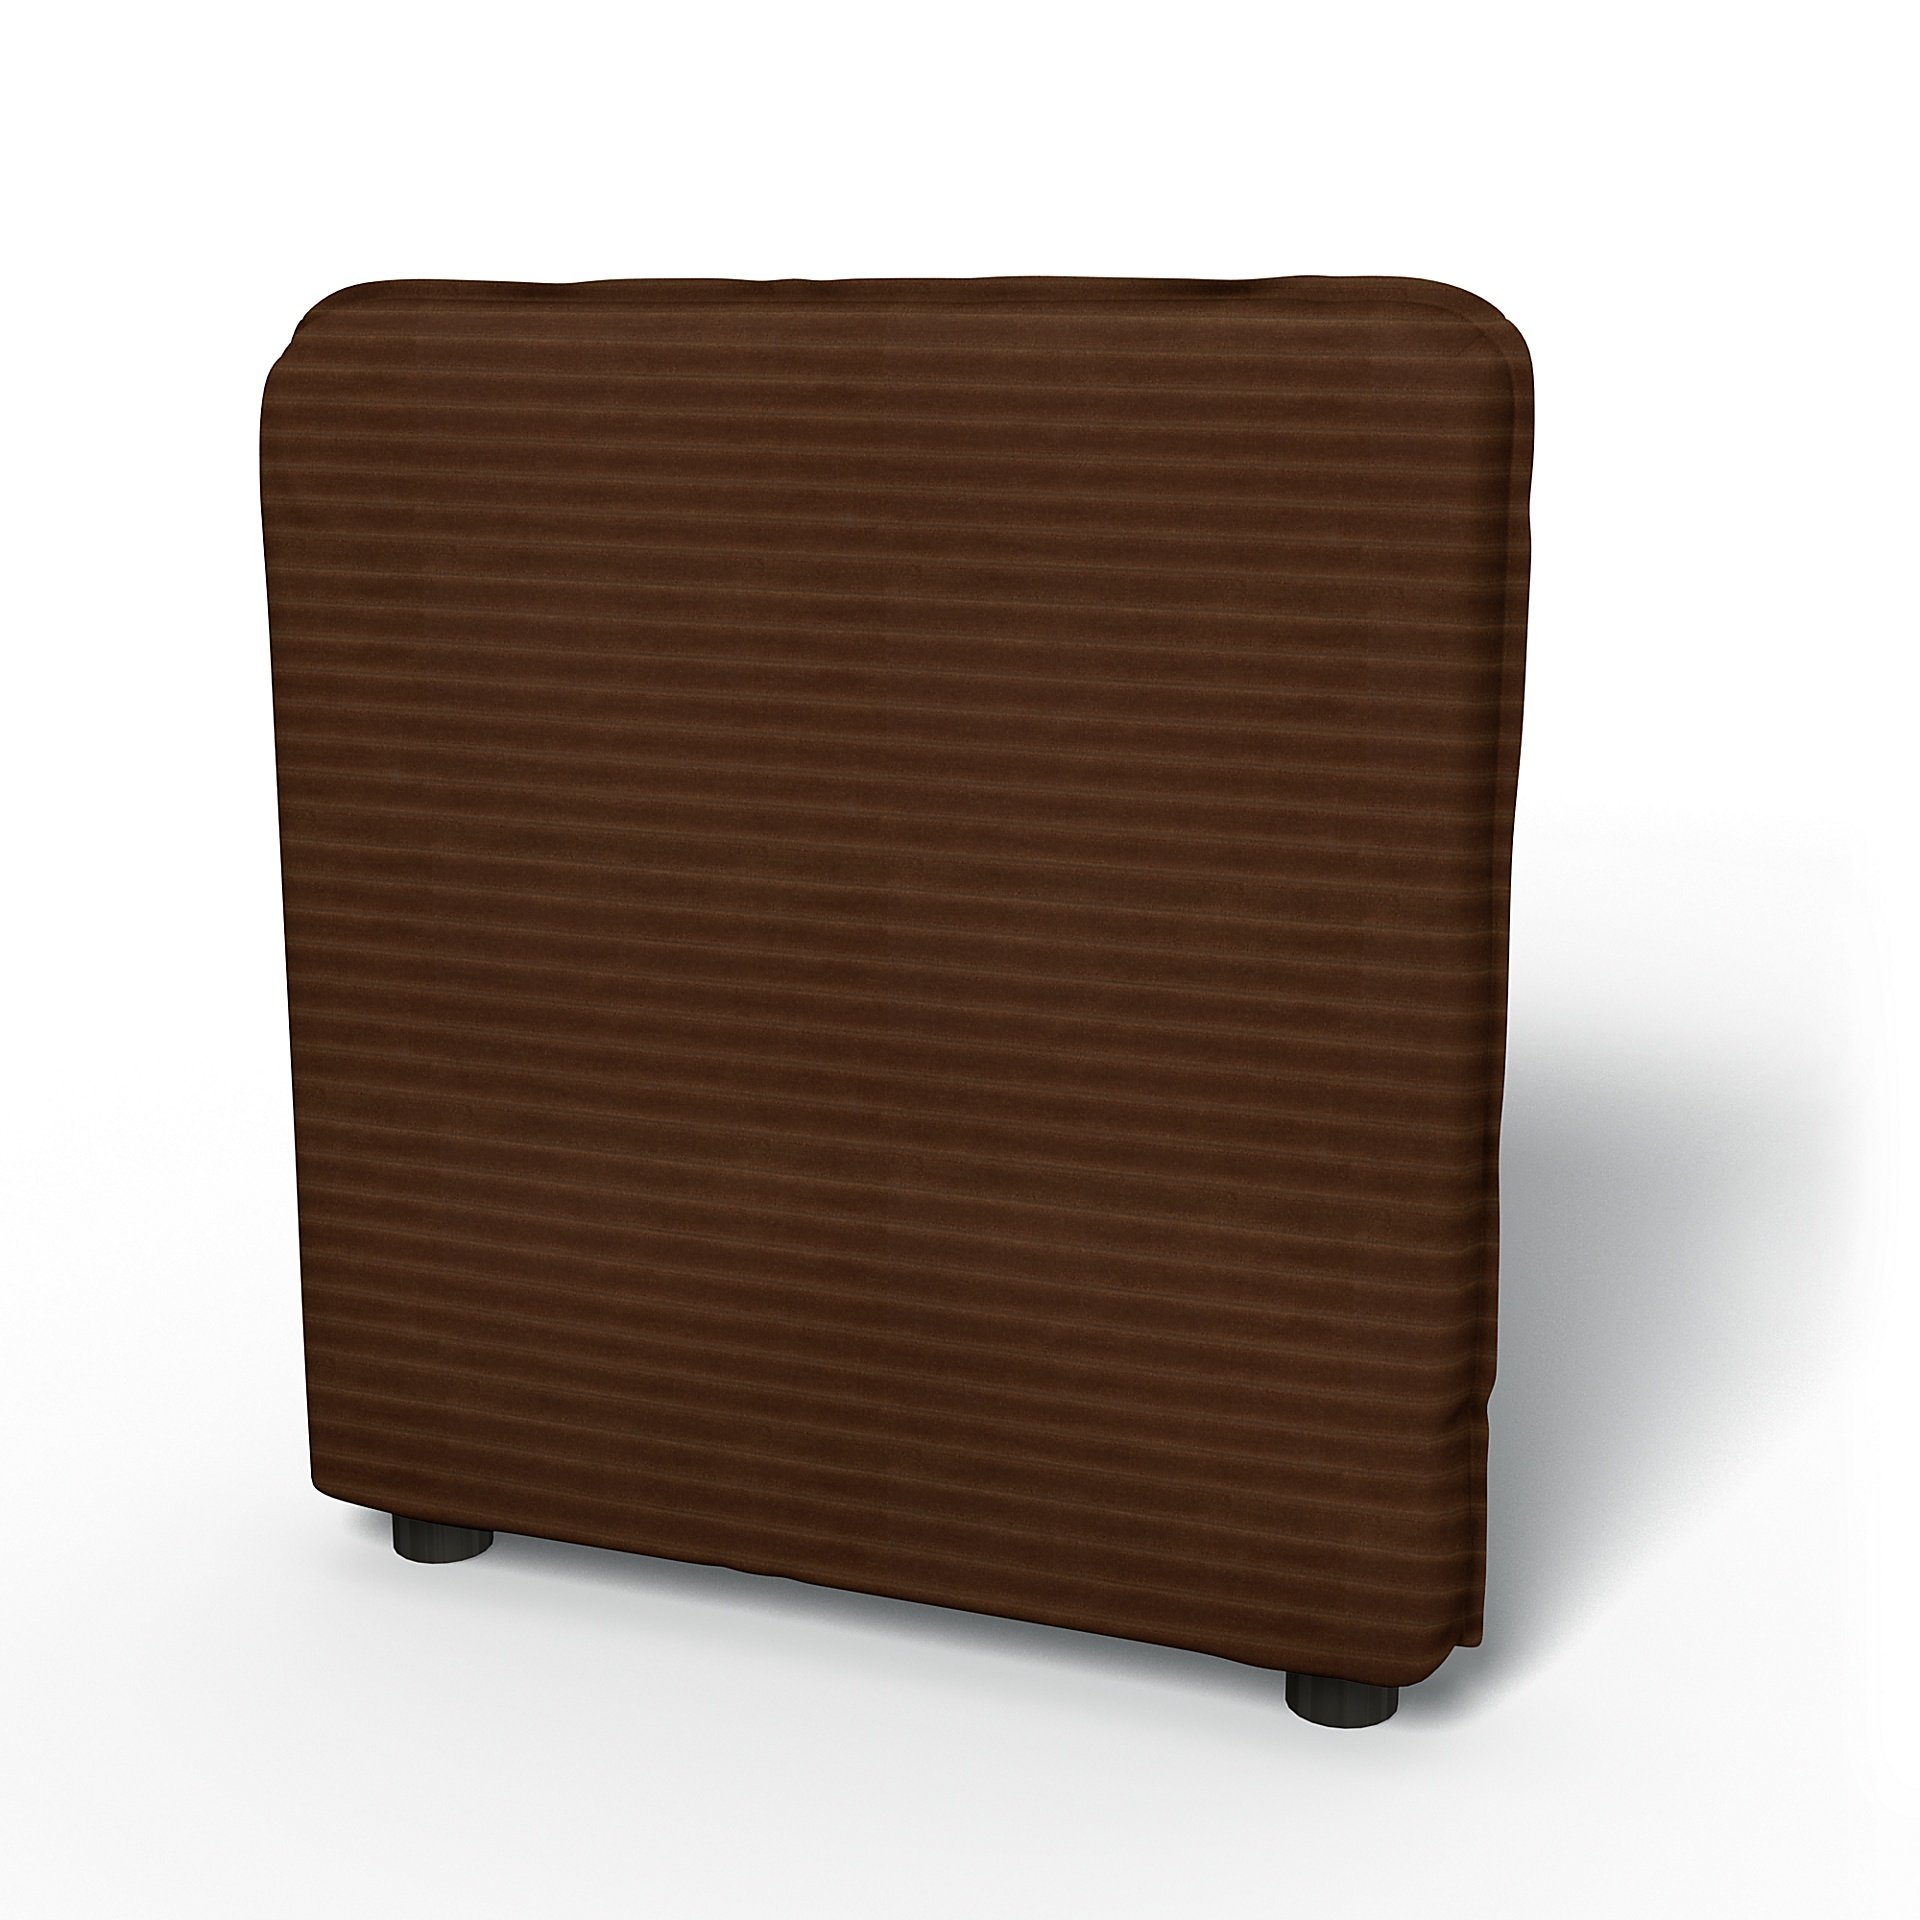 IKEA - Vallentuna Armrest Cover (80x60x13cm), Chocolate Brown, Corduroy - Bemz